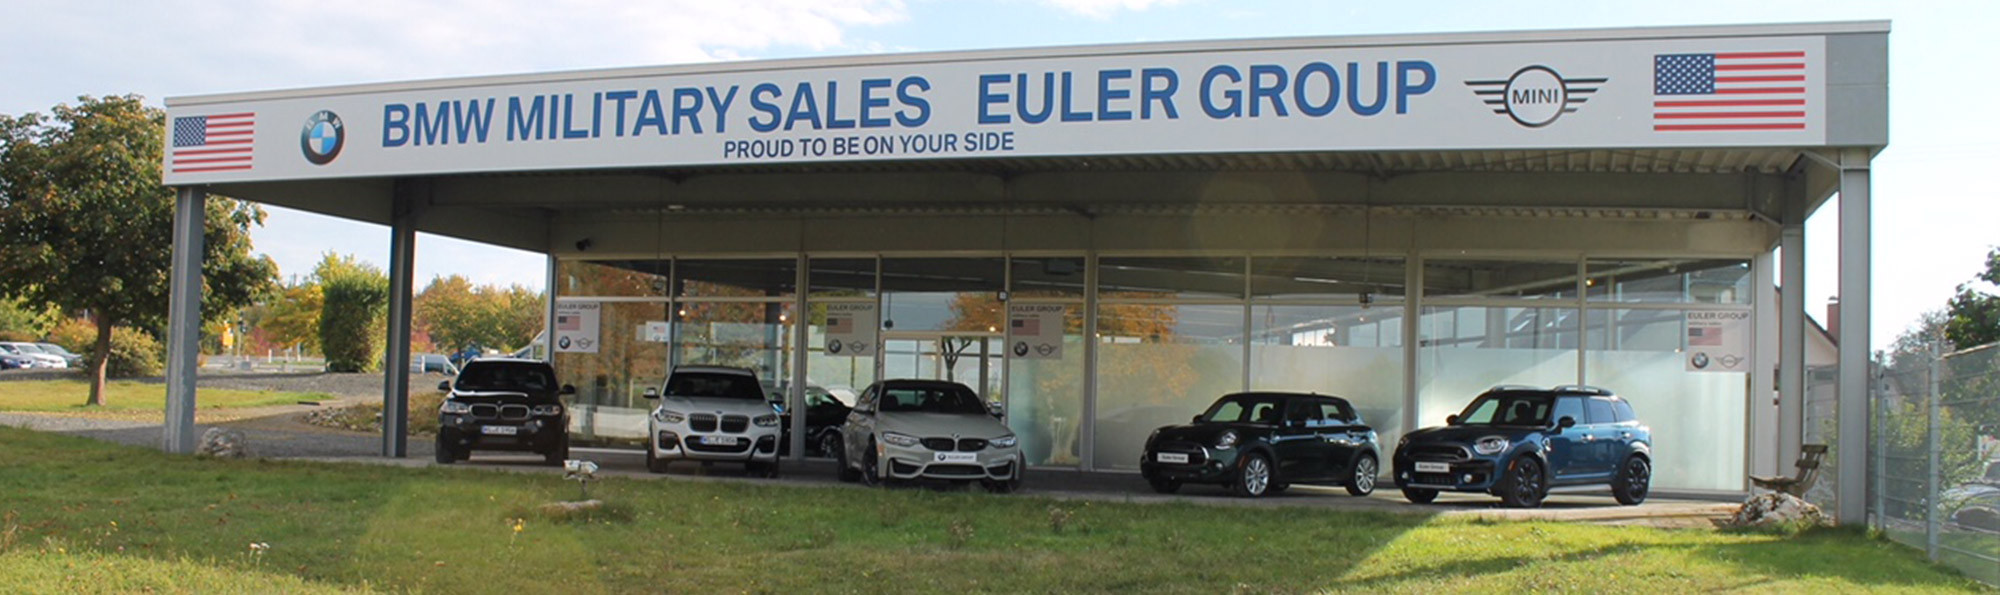 Autohaus Euler Military Sales Spangdahlem